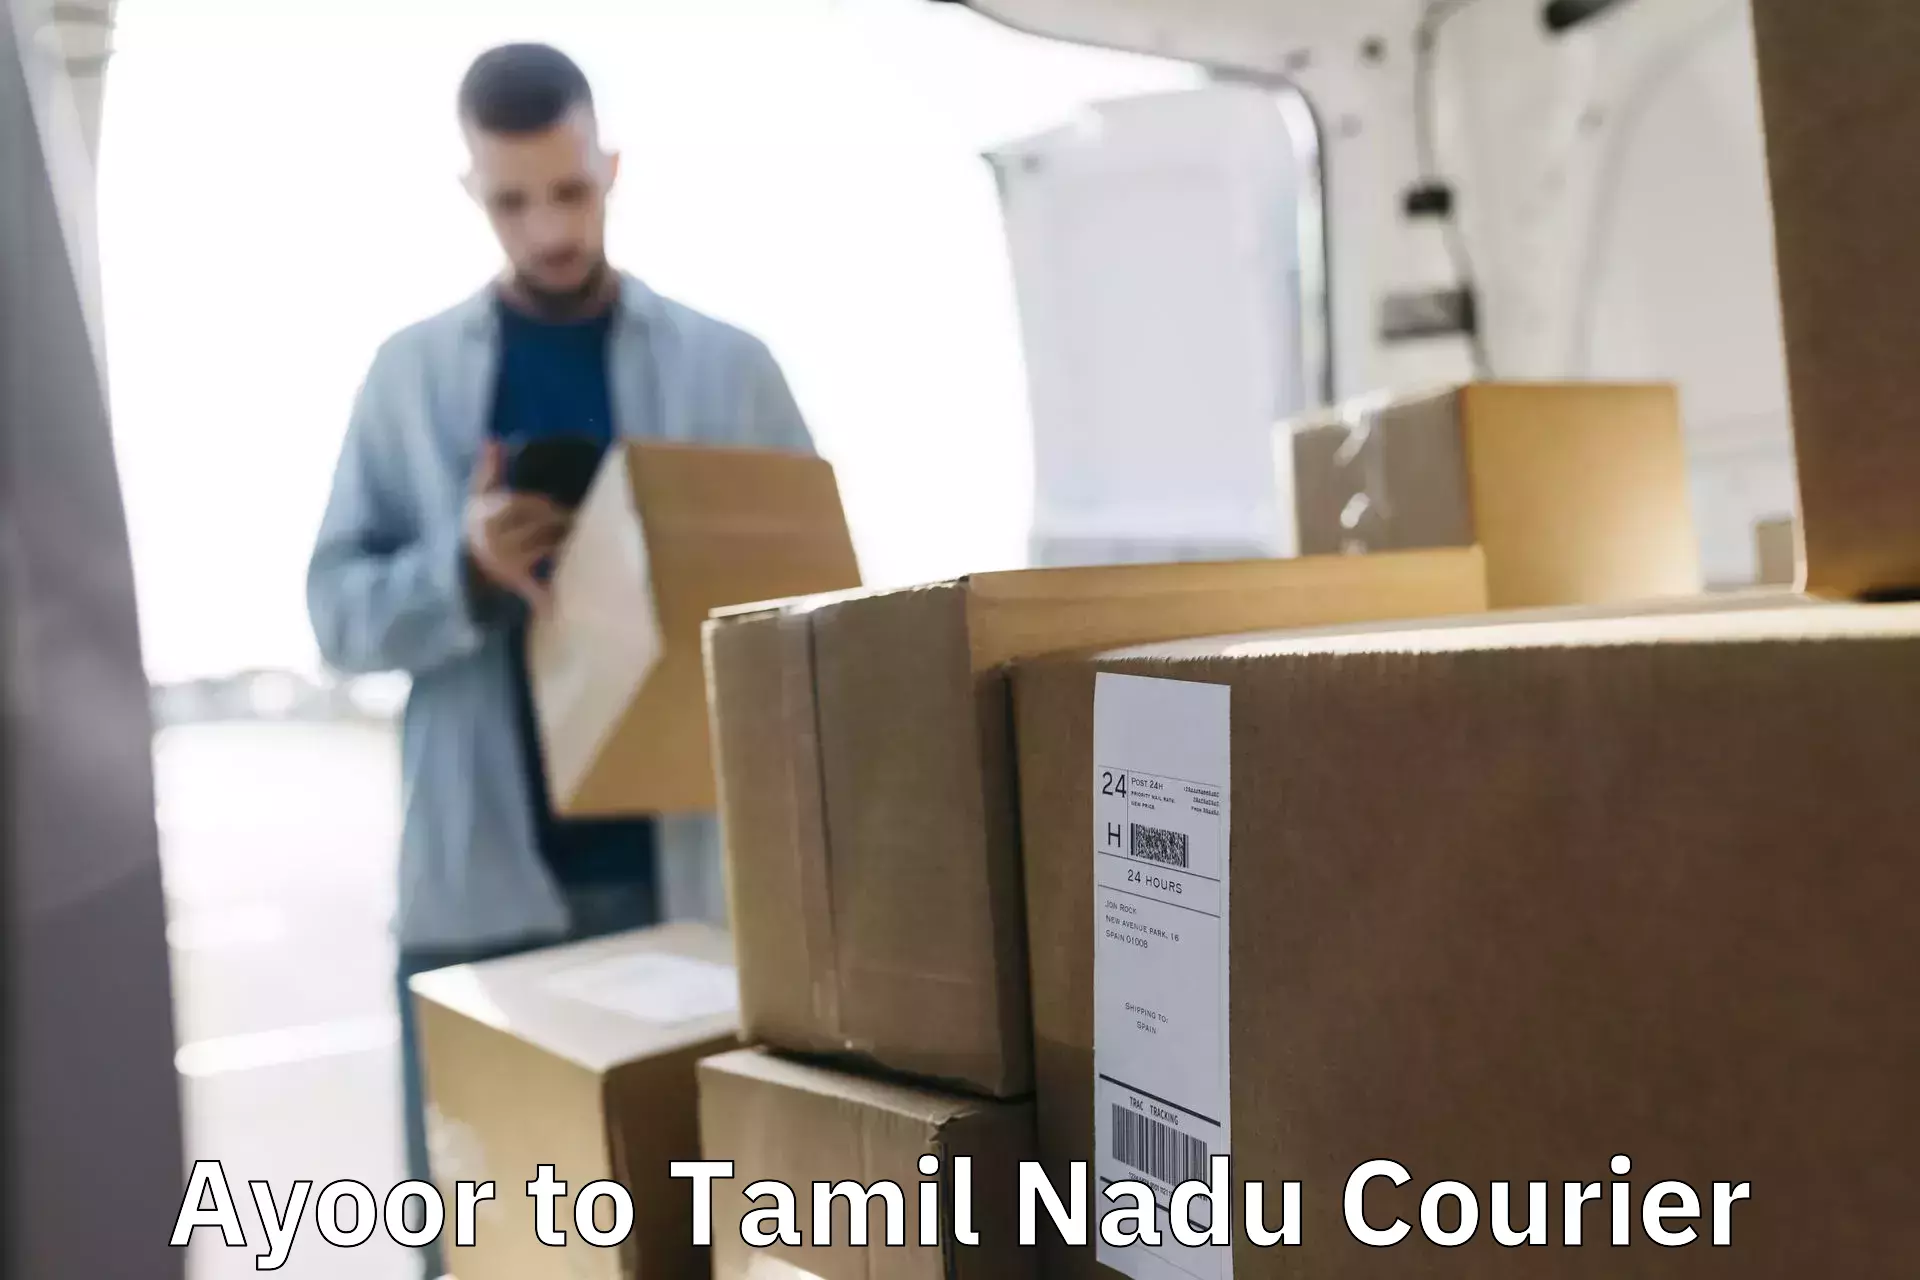 Courier service comparison Ayoor to Tamil Nadu